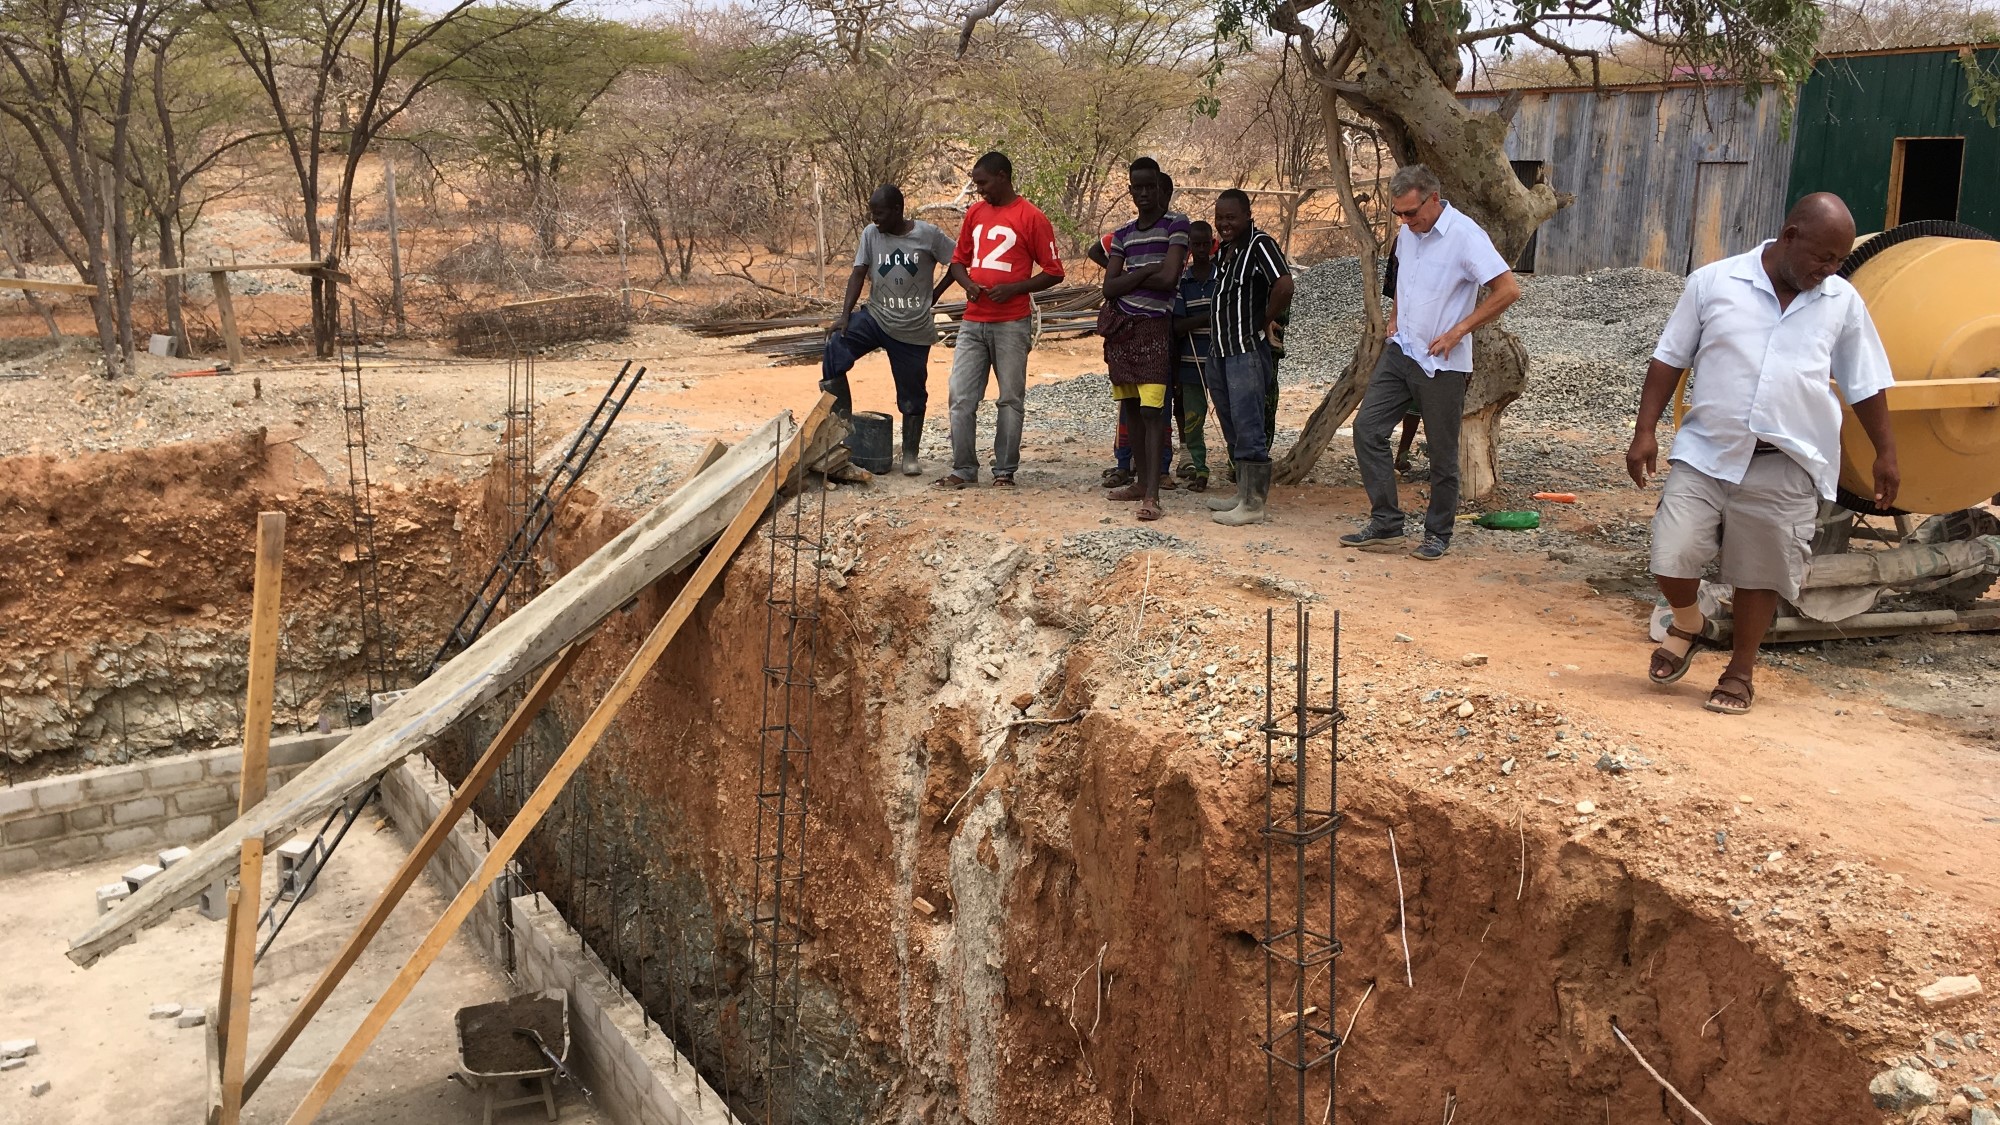 Menn som graver vannsisterne i en landsby i Kenya